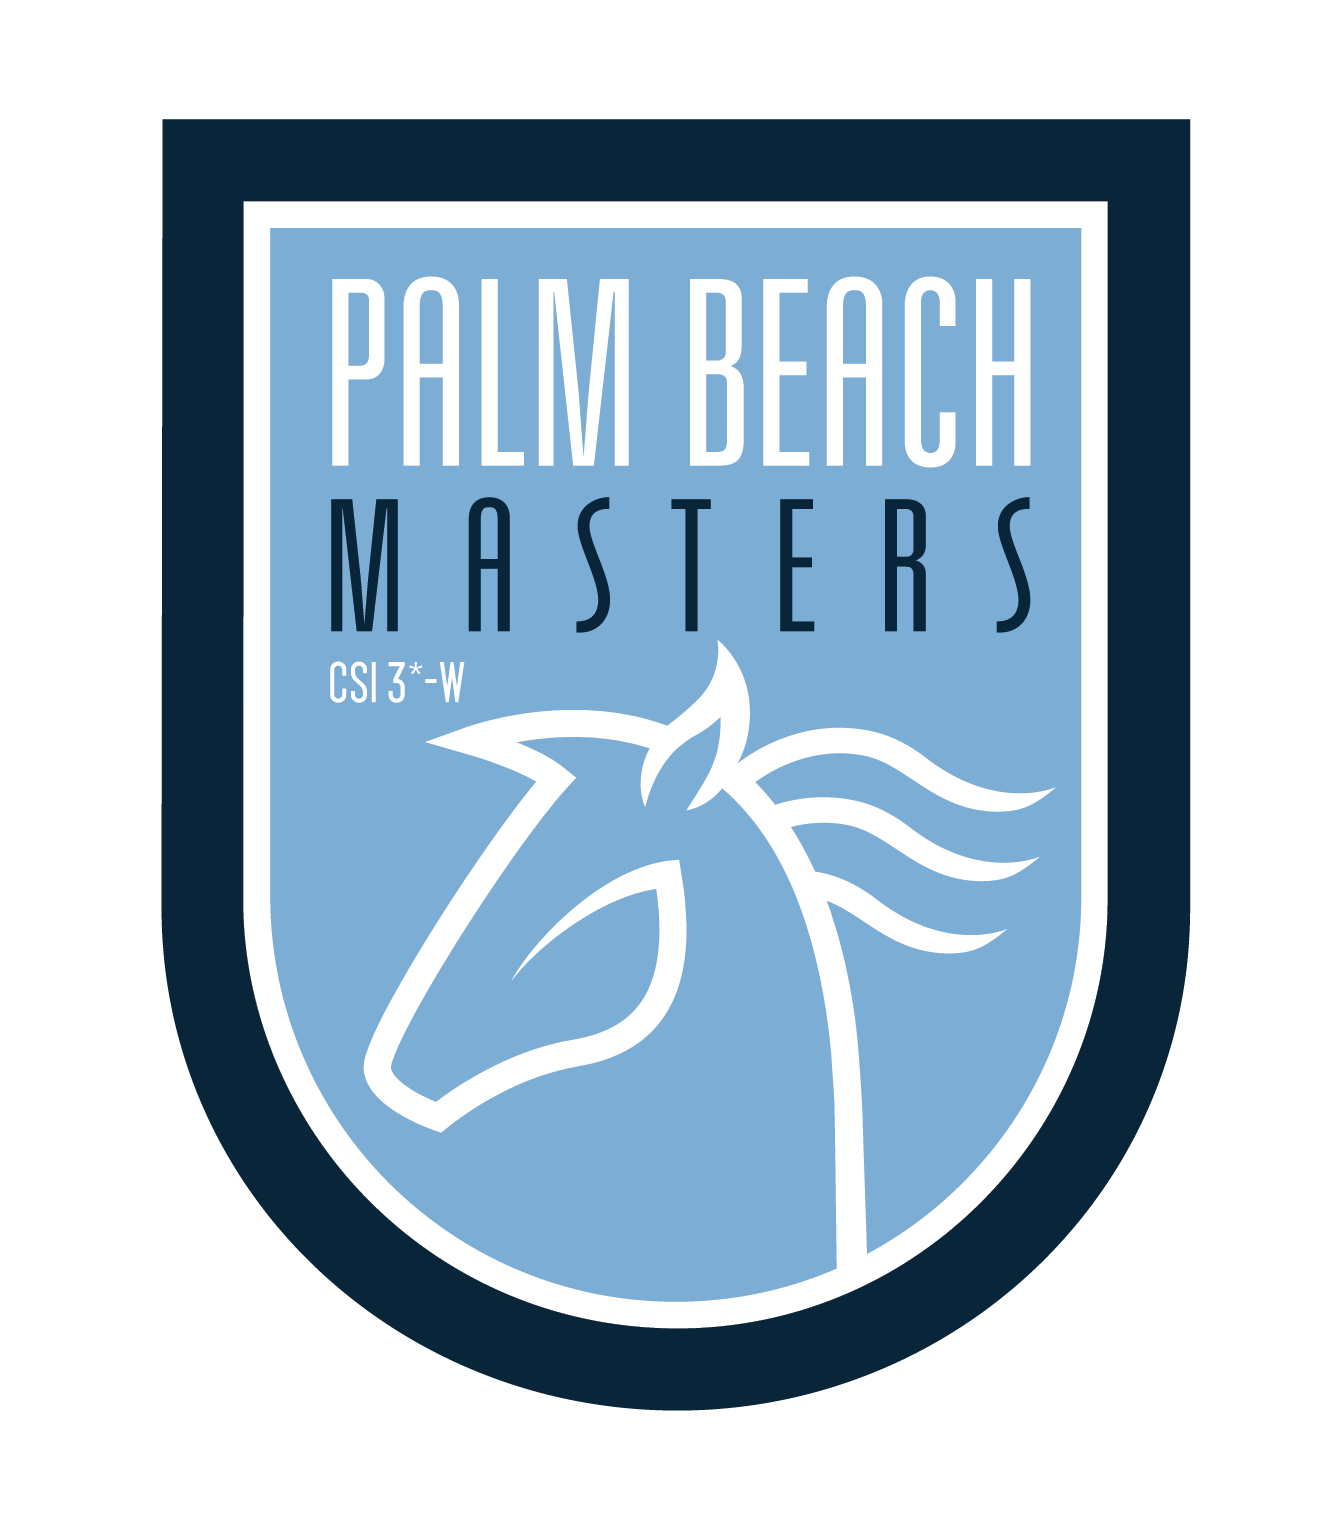 Palm Beach Masters.jpg